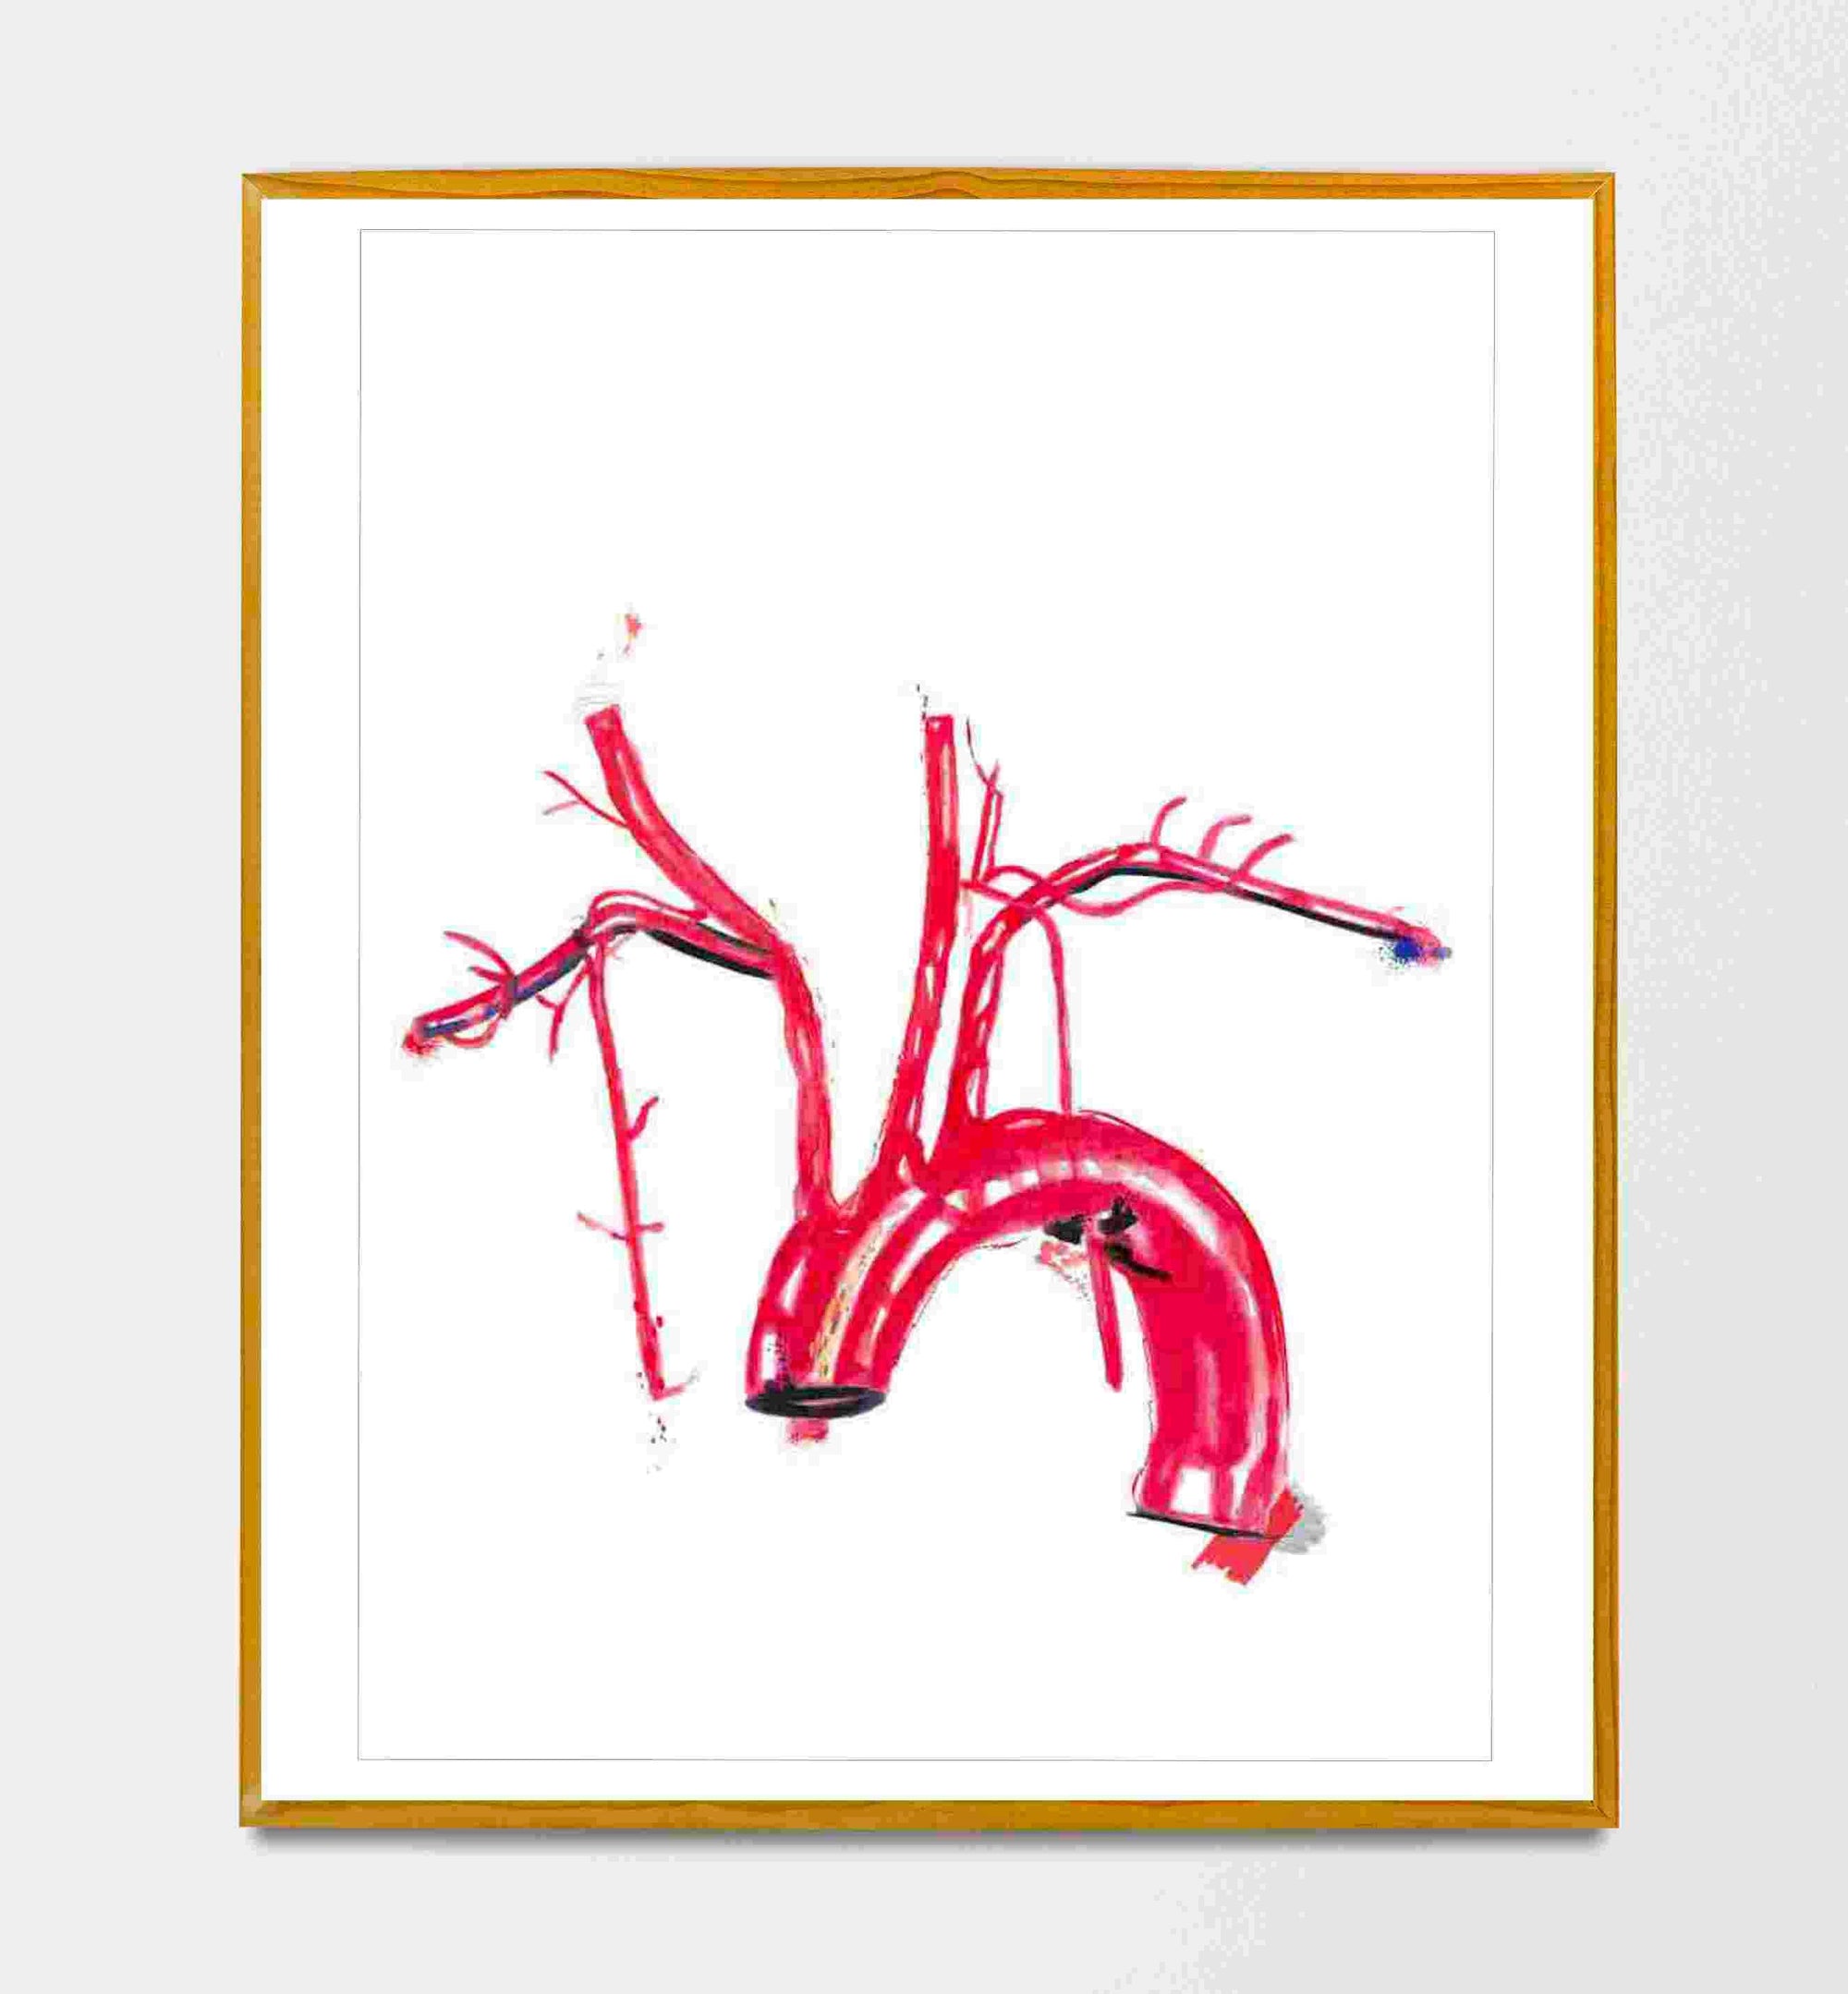 Aorta Anatomy, Aorta Art, Cardiology Art, Human Anatomy Art, Interventional Cardiology Cardiologist Gift, Physician Art, Medical Student Art